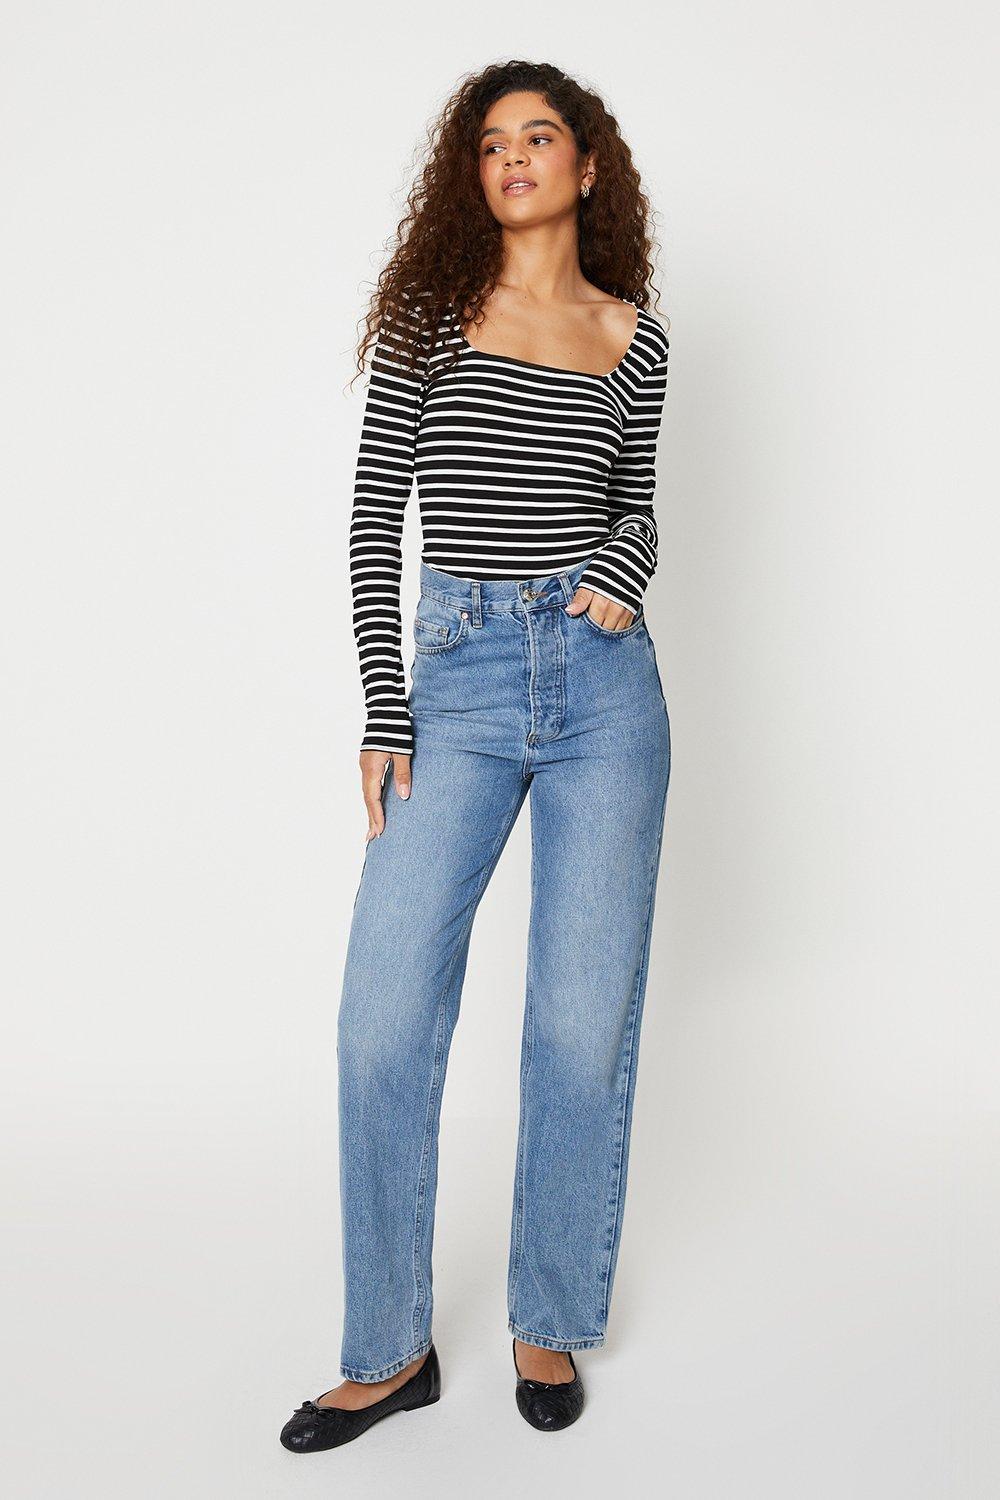 Women’s Tall Stripe Square Neck Long Sleeve Top - XL